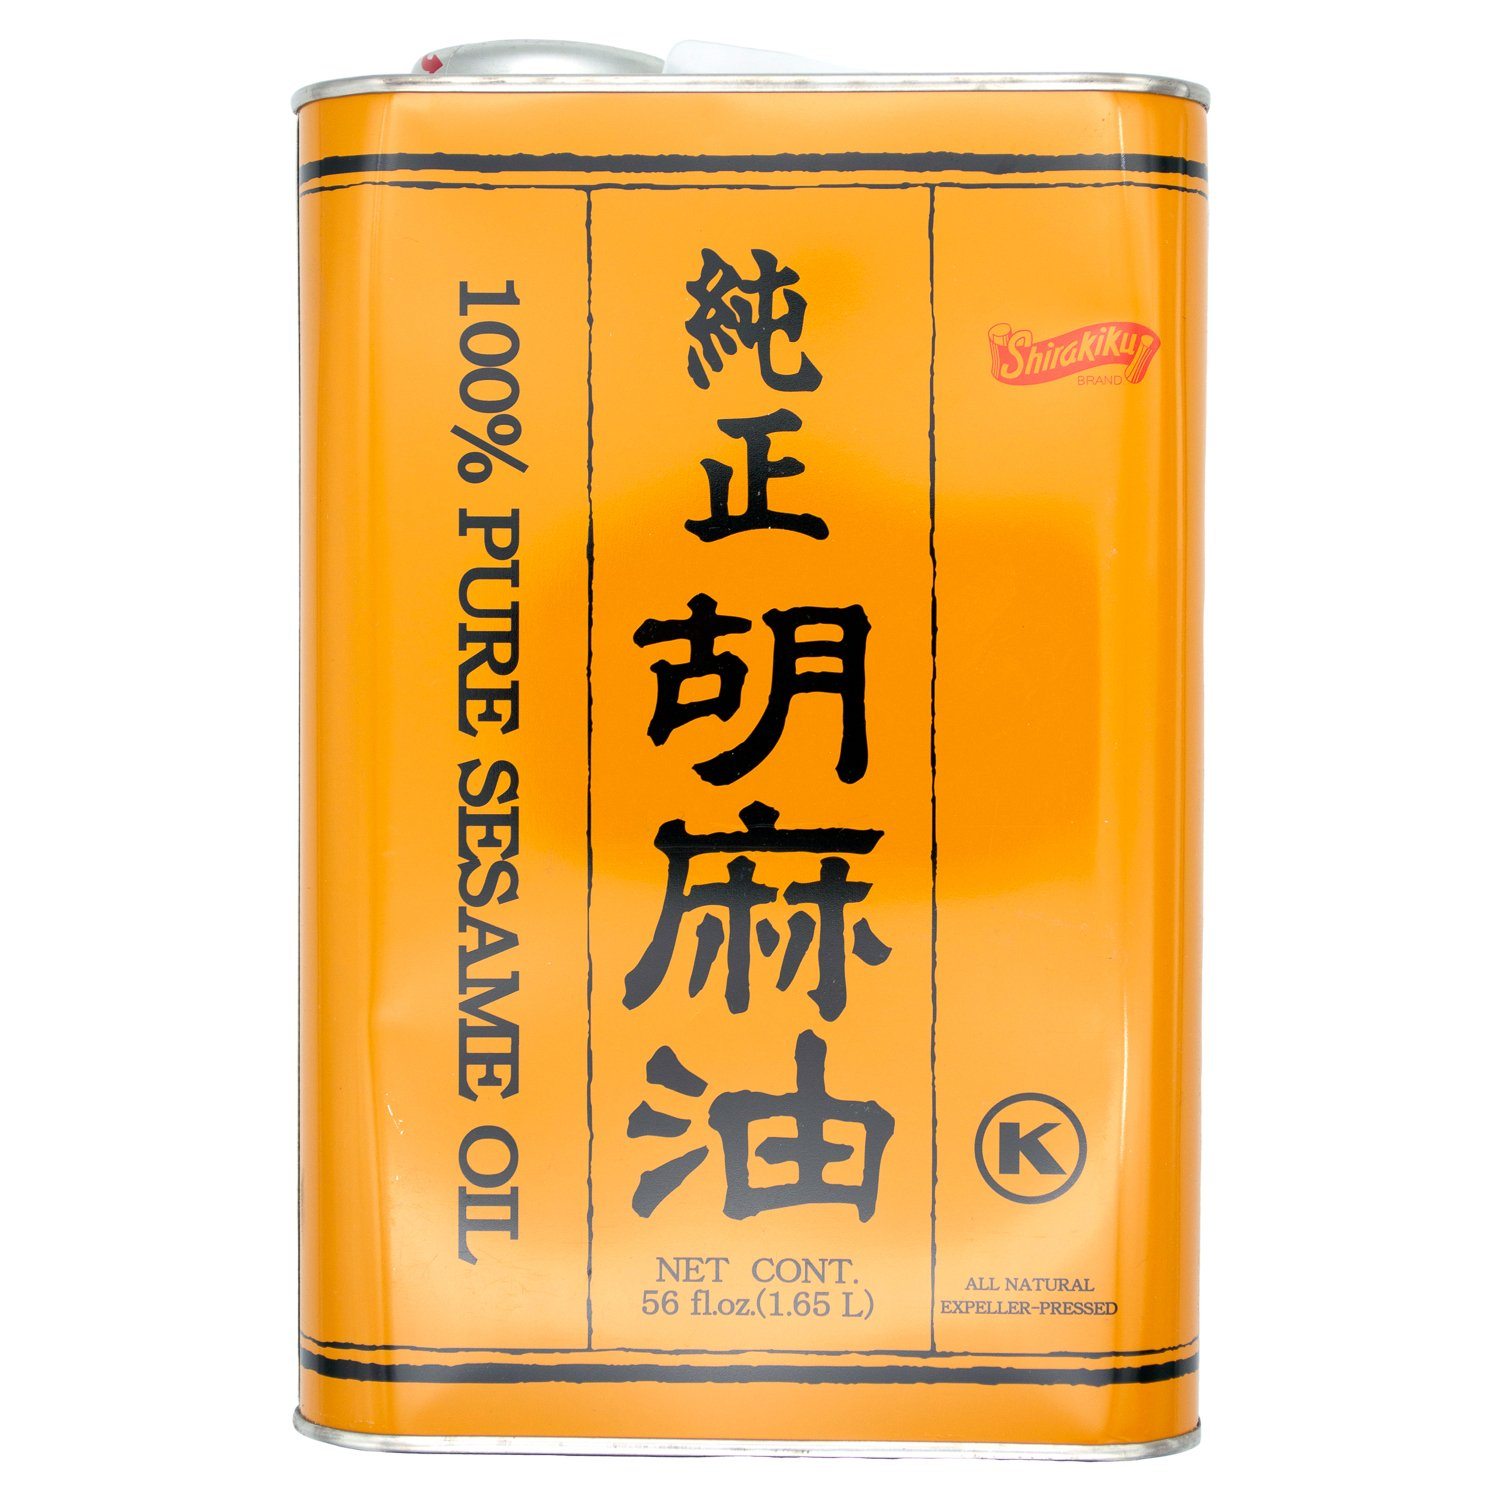 Shirakiku 100% Pure Sesame Oil Shirakiku 56 Fluid Ounce 